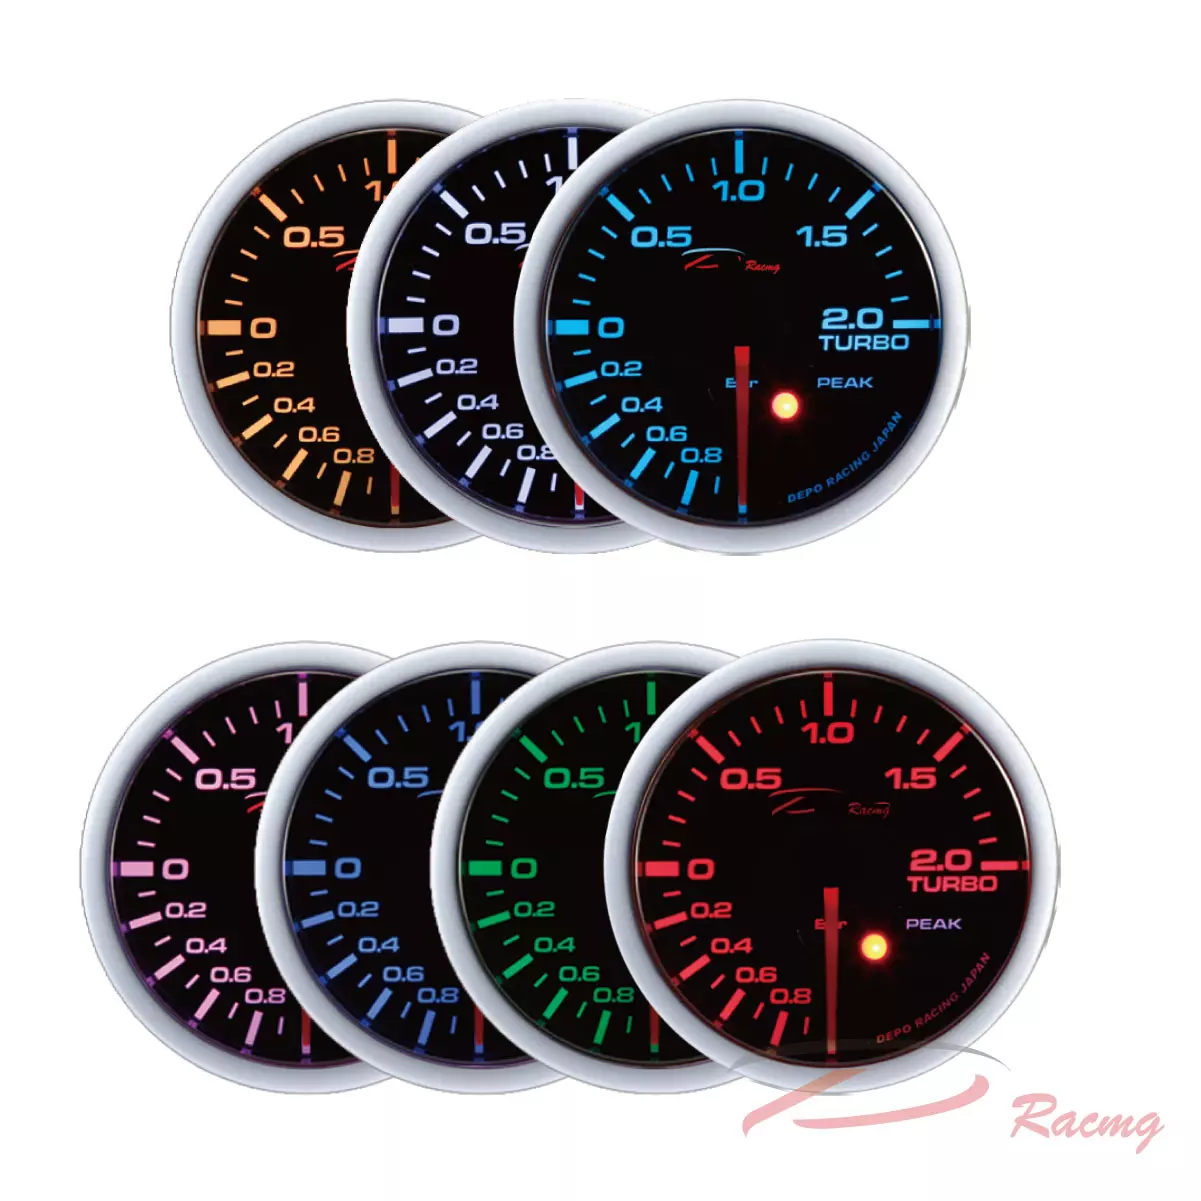 Dracing, Depo racing, boost gauge, gauge boost, autometer boost gauge, boost gauge kit, AutoMeter, performance boost gauges, accurate boost gauges, durable boost gauges, Pro-comp boost gauges, ultra-lite boost gauges, cobalt boost gauges, carbon fiber boost gauges, car boost gauges, racing boost gauges, truck boost gauges, suv boost gauges, 2-1/16" boost gauges, 2-5/8" boost gauges, boost gauges pillars, gauge pillar kits, boost/vacuum gauges, vacuum gauges, psi boost gauges, analog boost gauges, digital boost gages, air-core boost gauges, mechanical boost gauges, digital-stepper motor boost gauges, best boost gauges, professional boost gauges